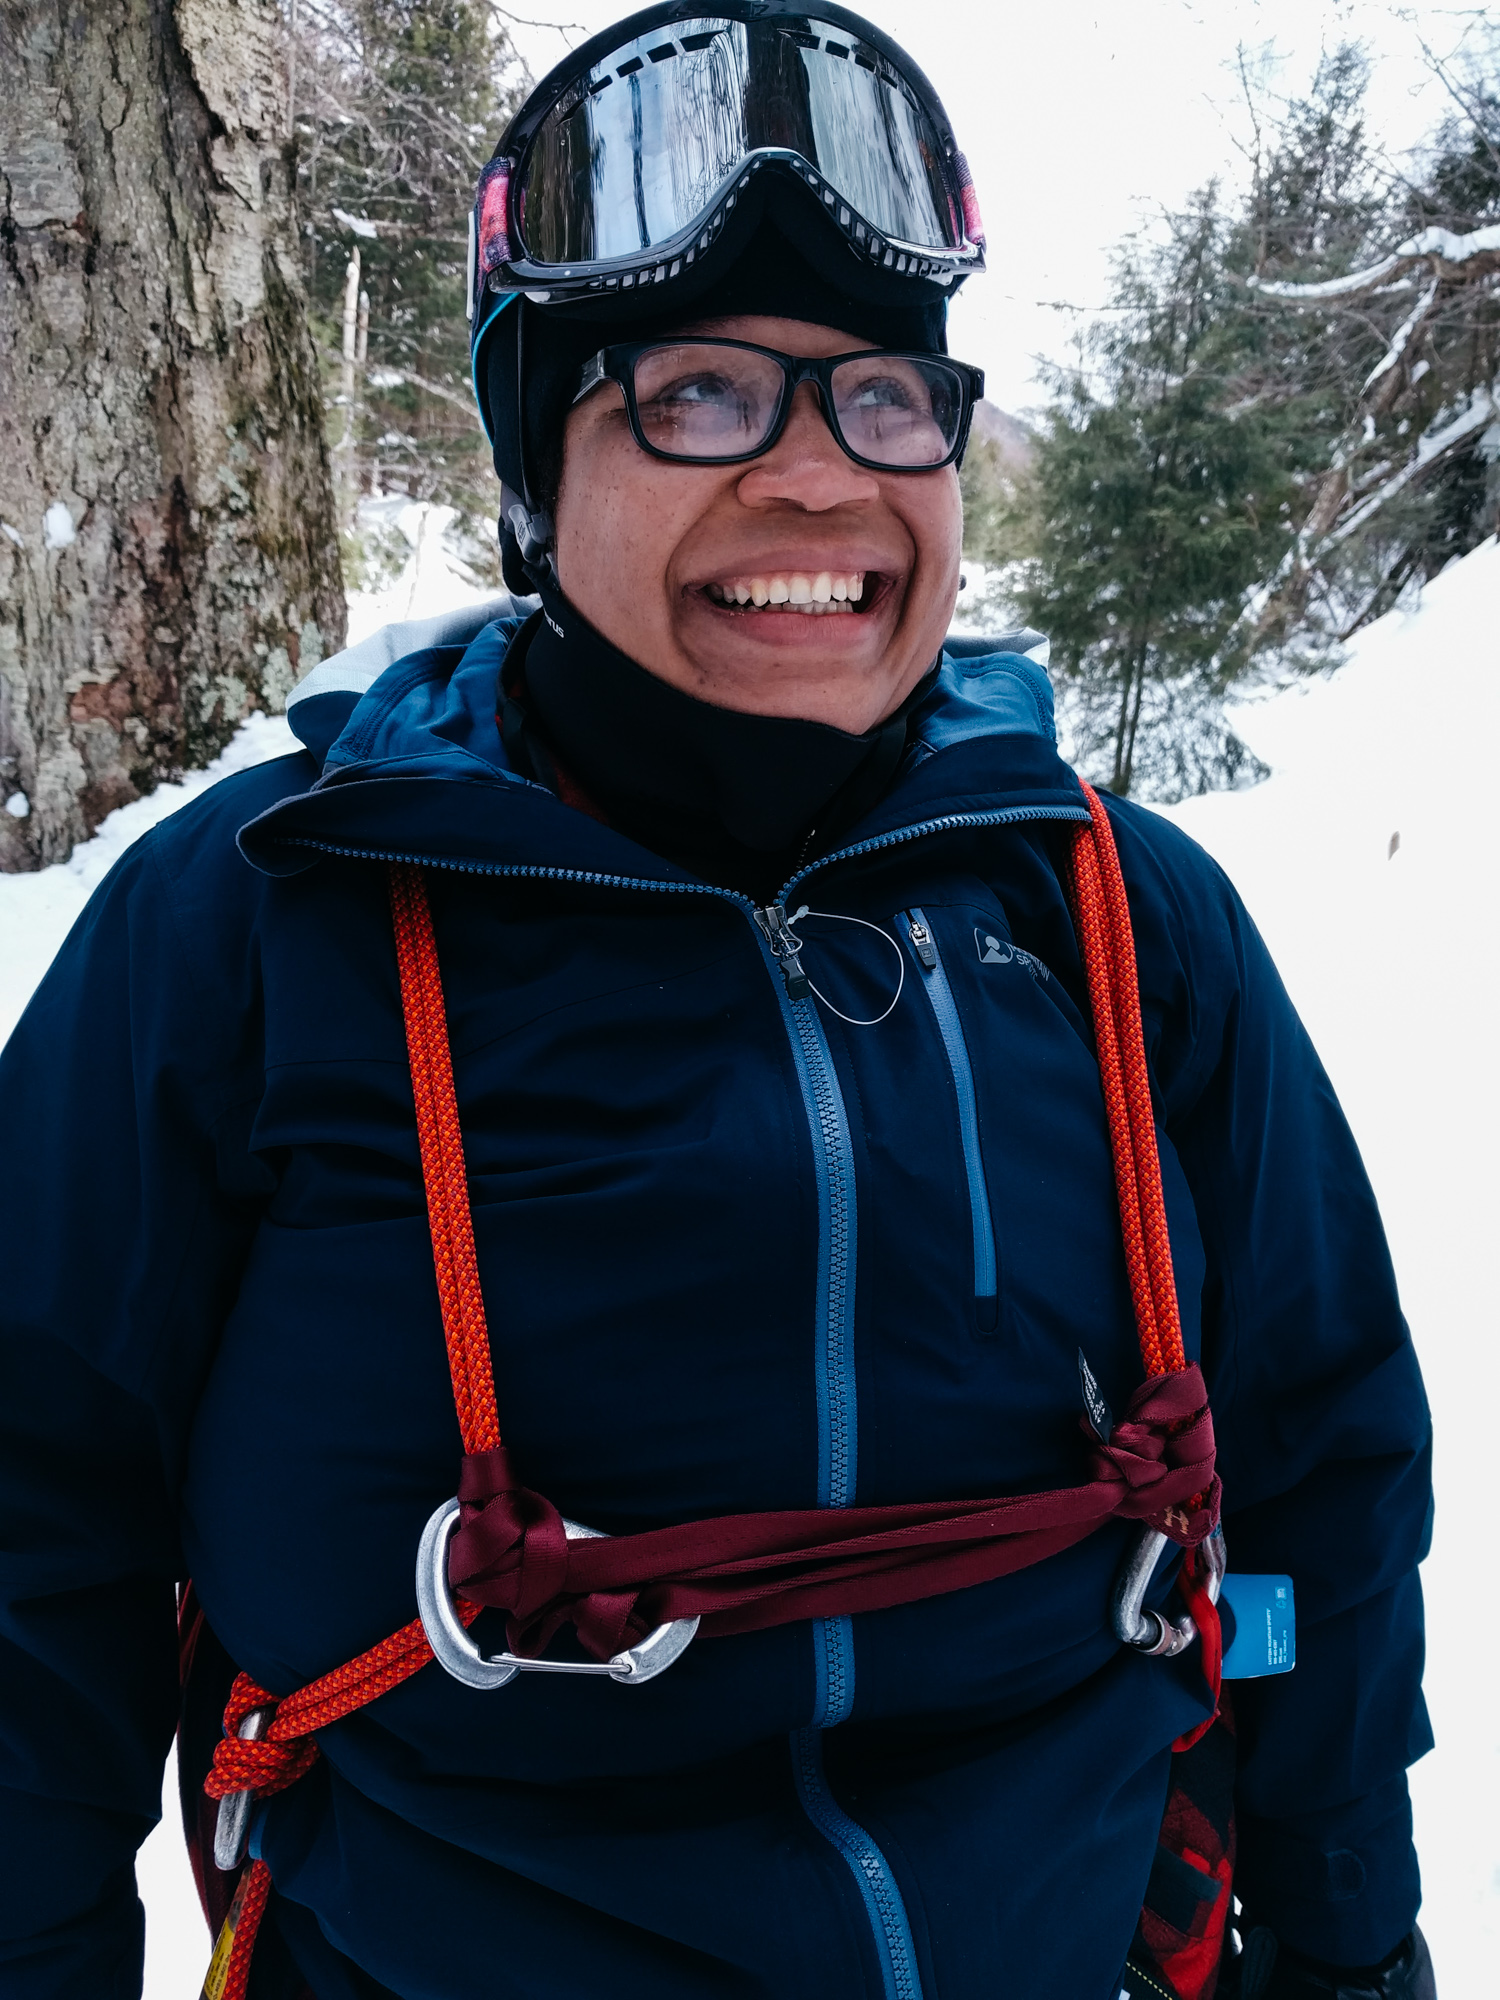 Kareemah Batts in ski gear, smiling.